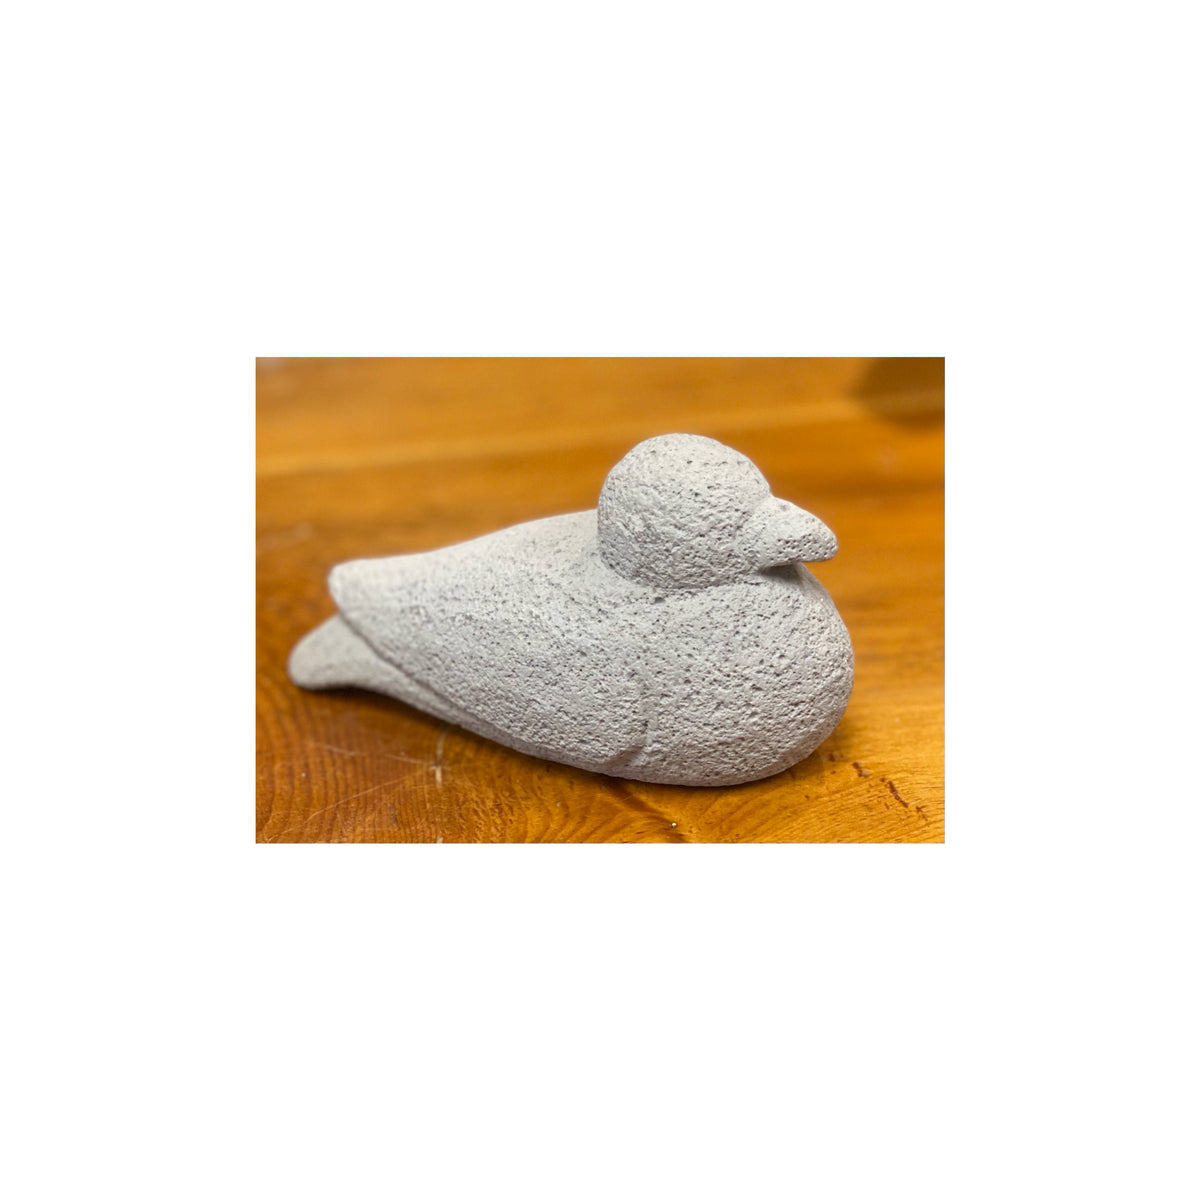 Small Cement Bird